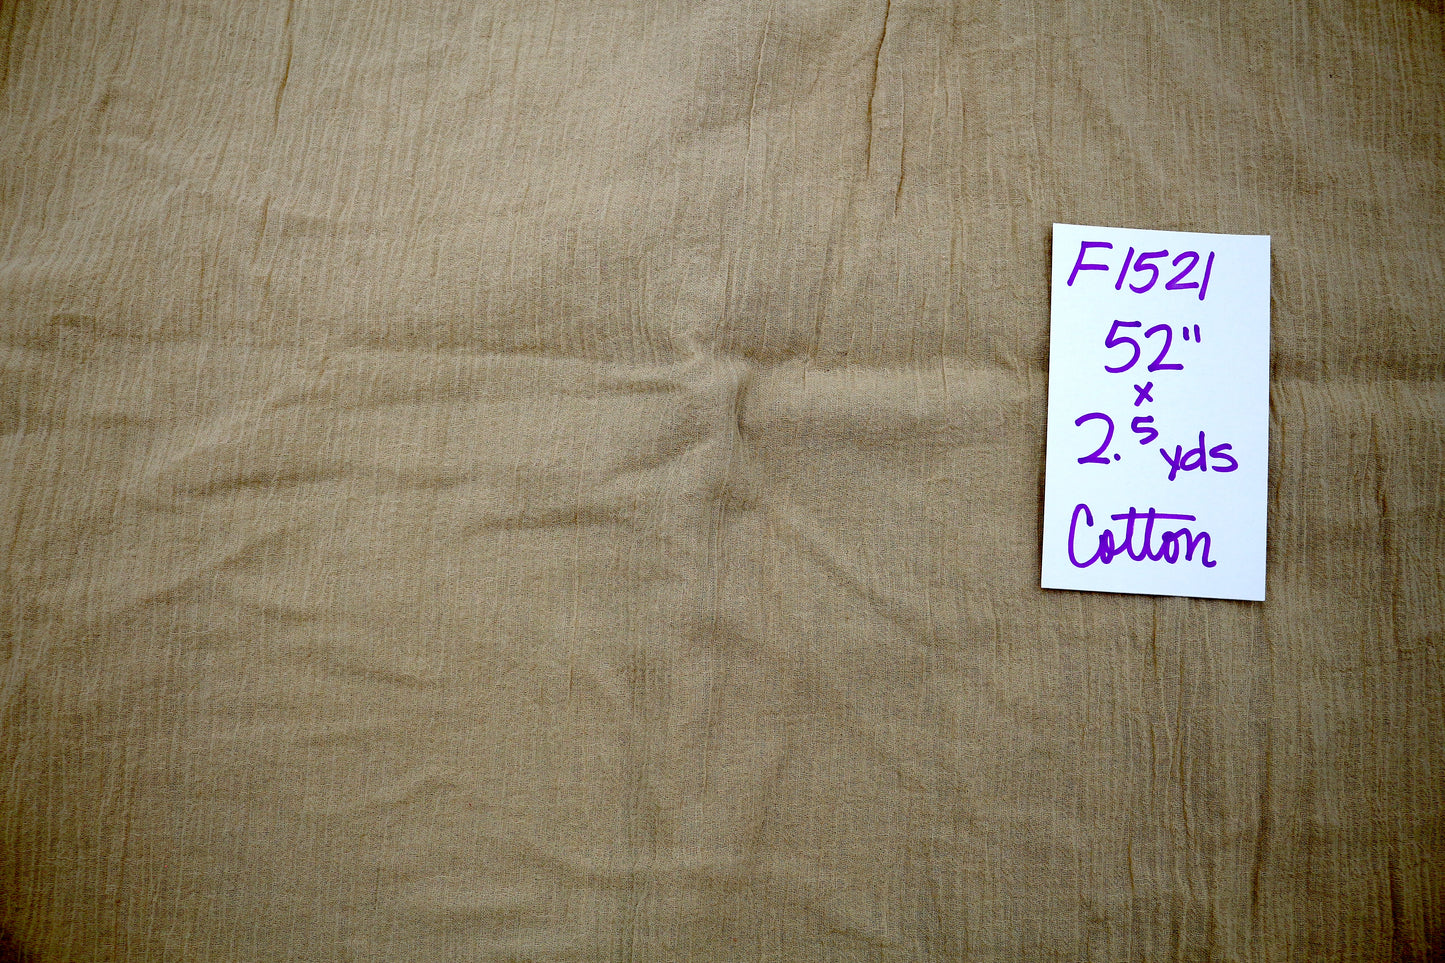 Sandy Feet Gauze Cotton Fabric 52" x 2.5 yds